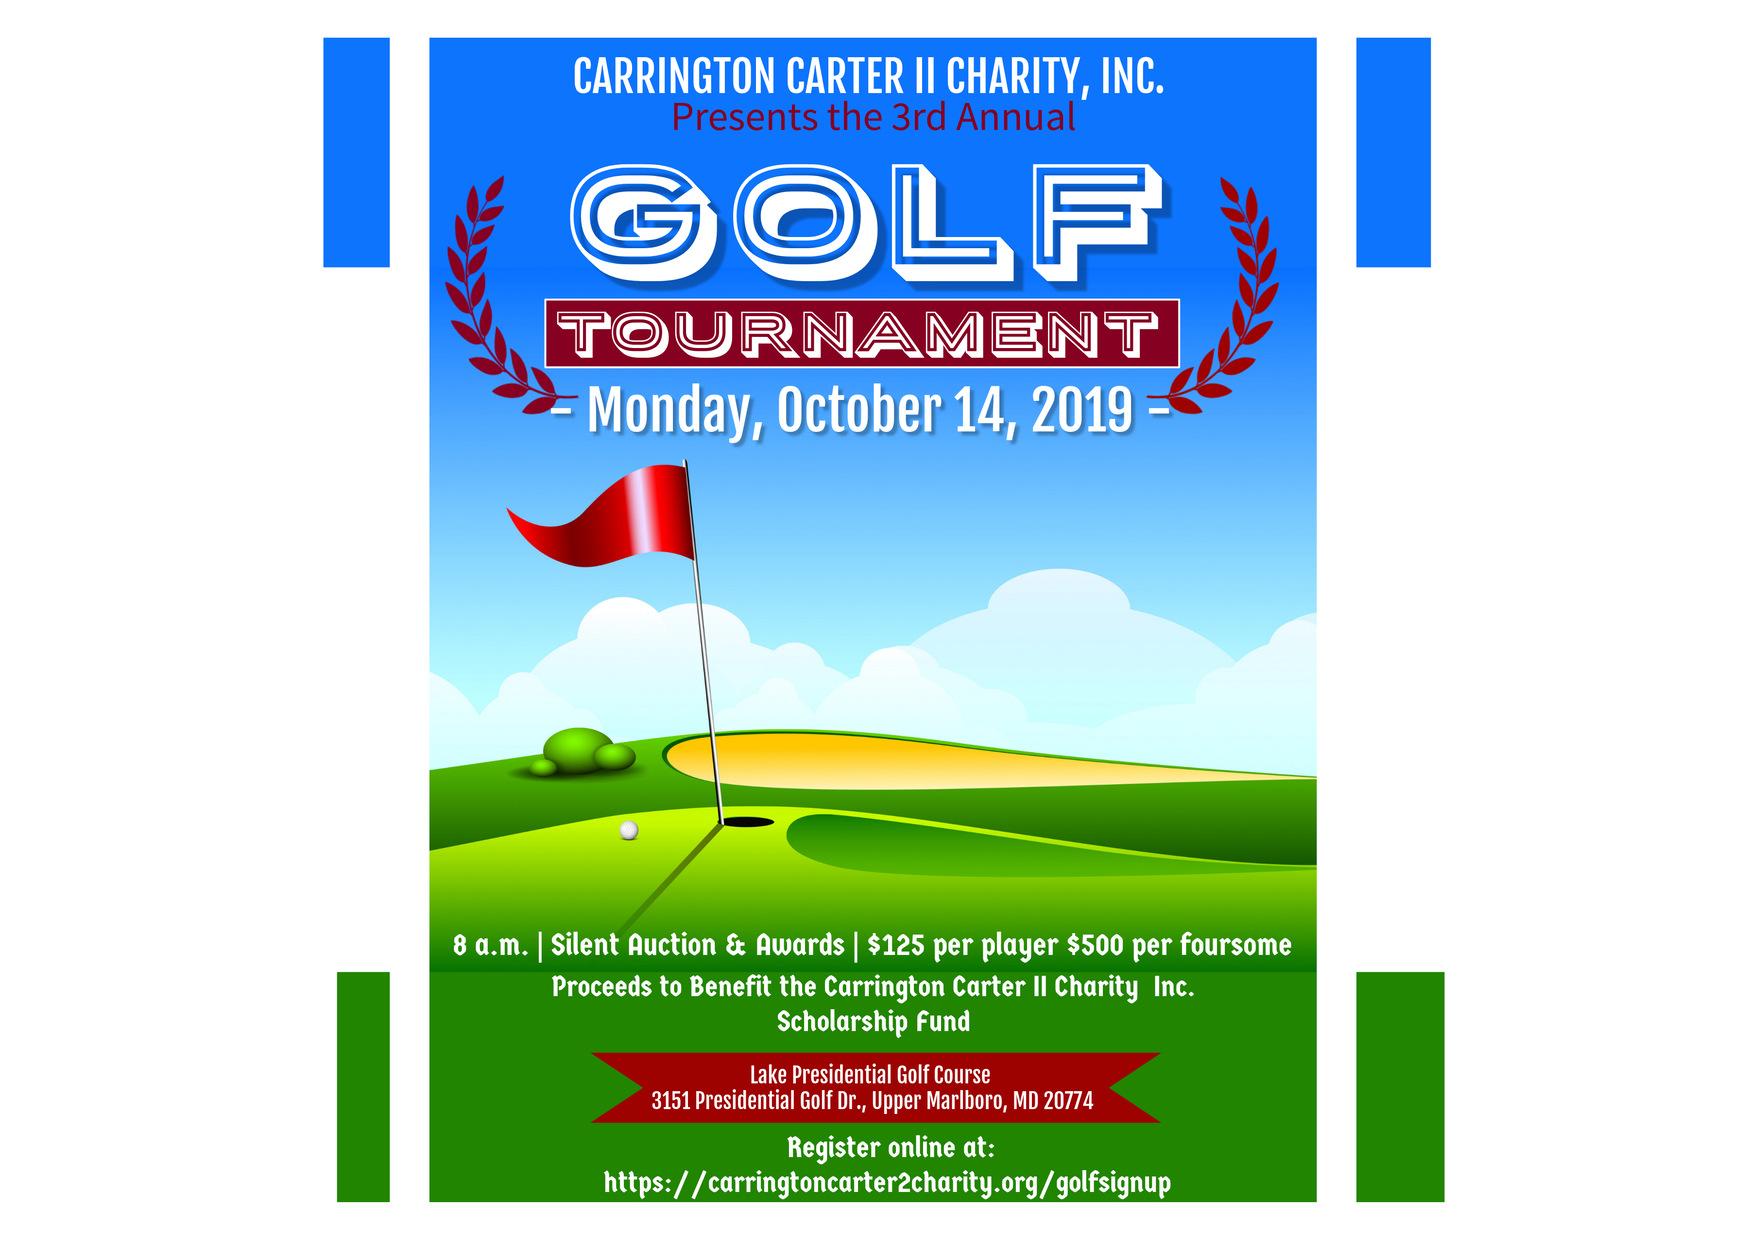 Carrington Carter II Charity, Inc. Third Annual Golf Tournament and Silent Auction